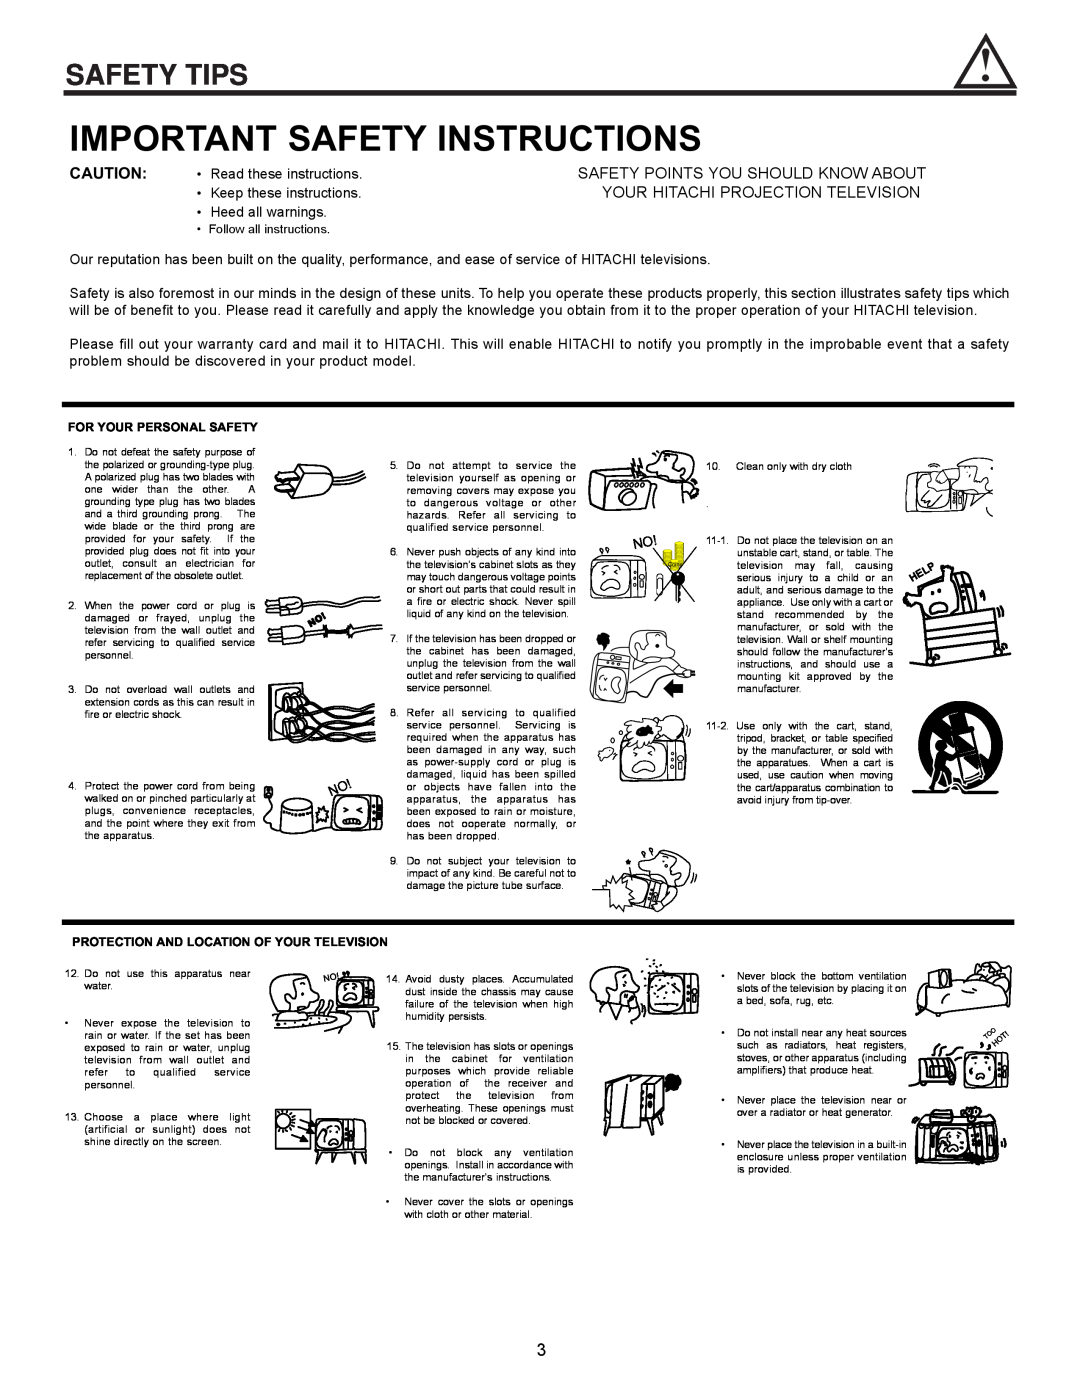 Hitachi 61UWX10B Safety Tips, Important Safety Instructions, Read these instructions, Keep these instructions 